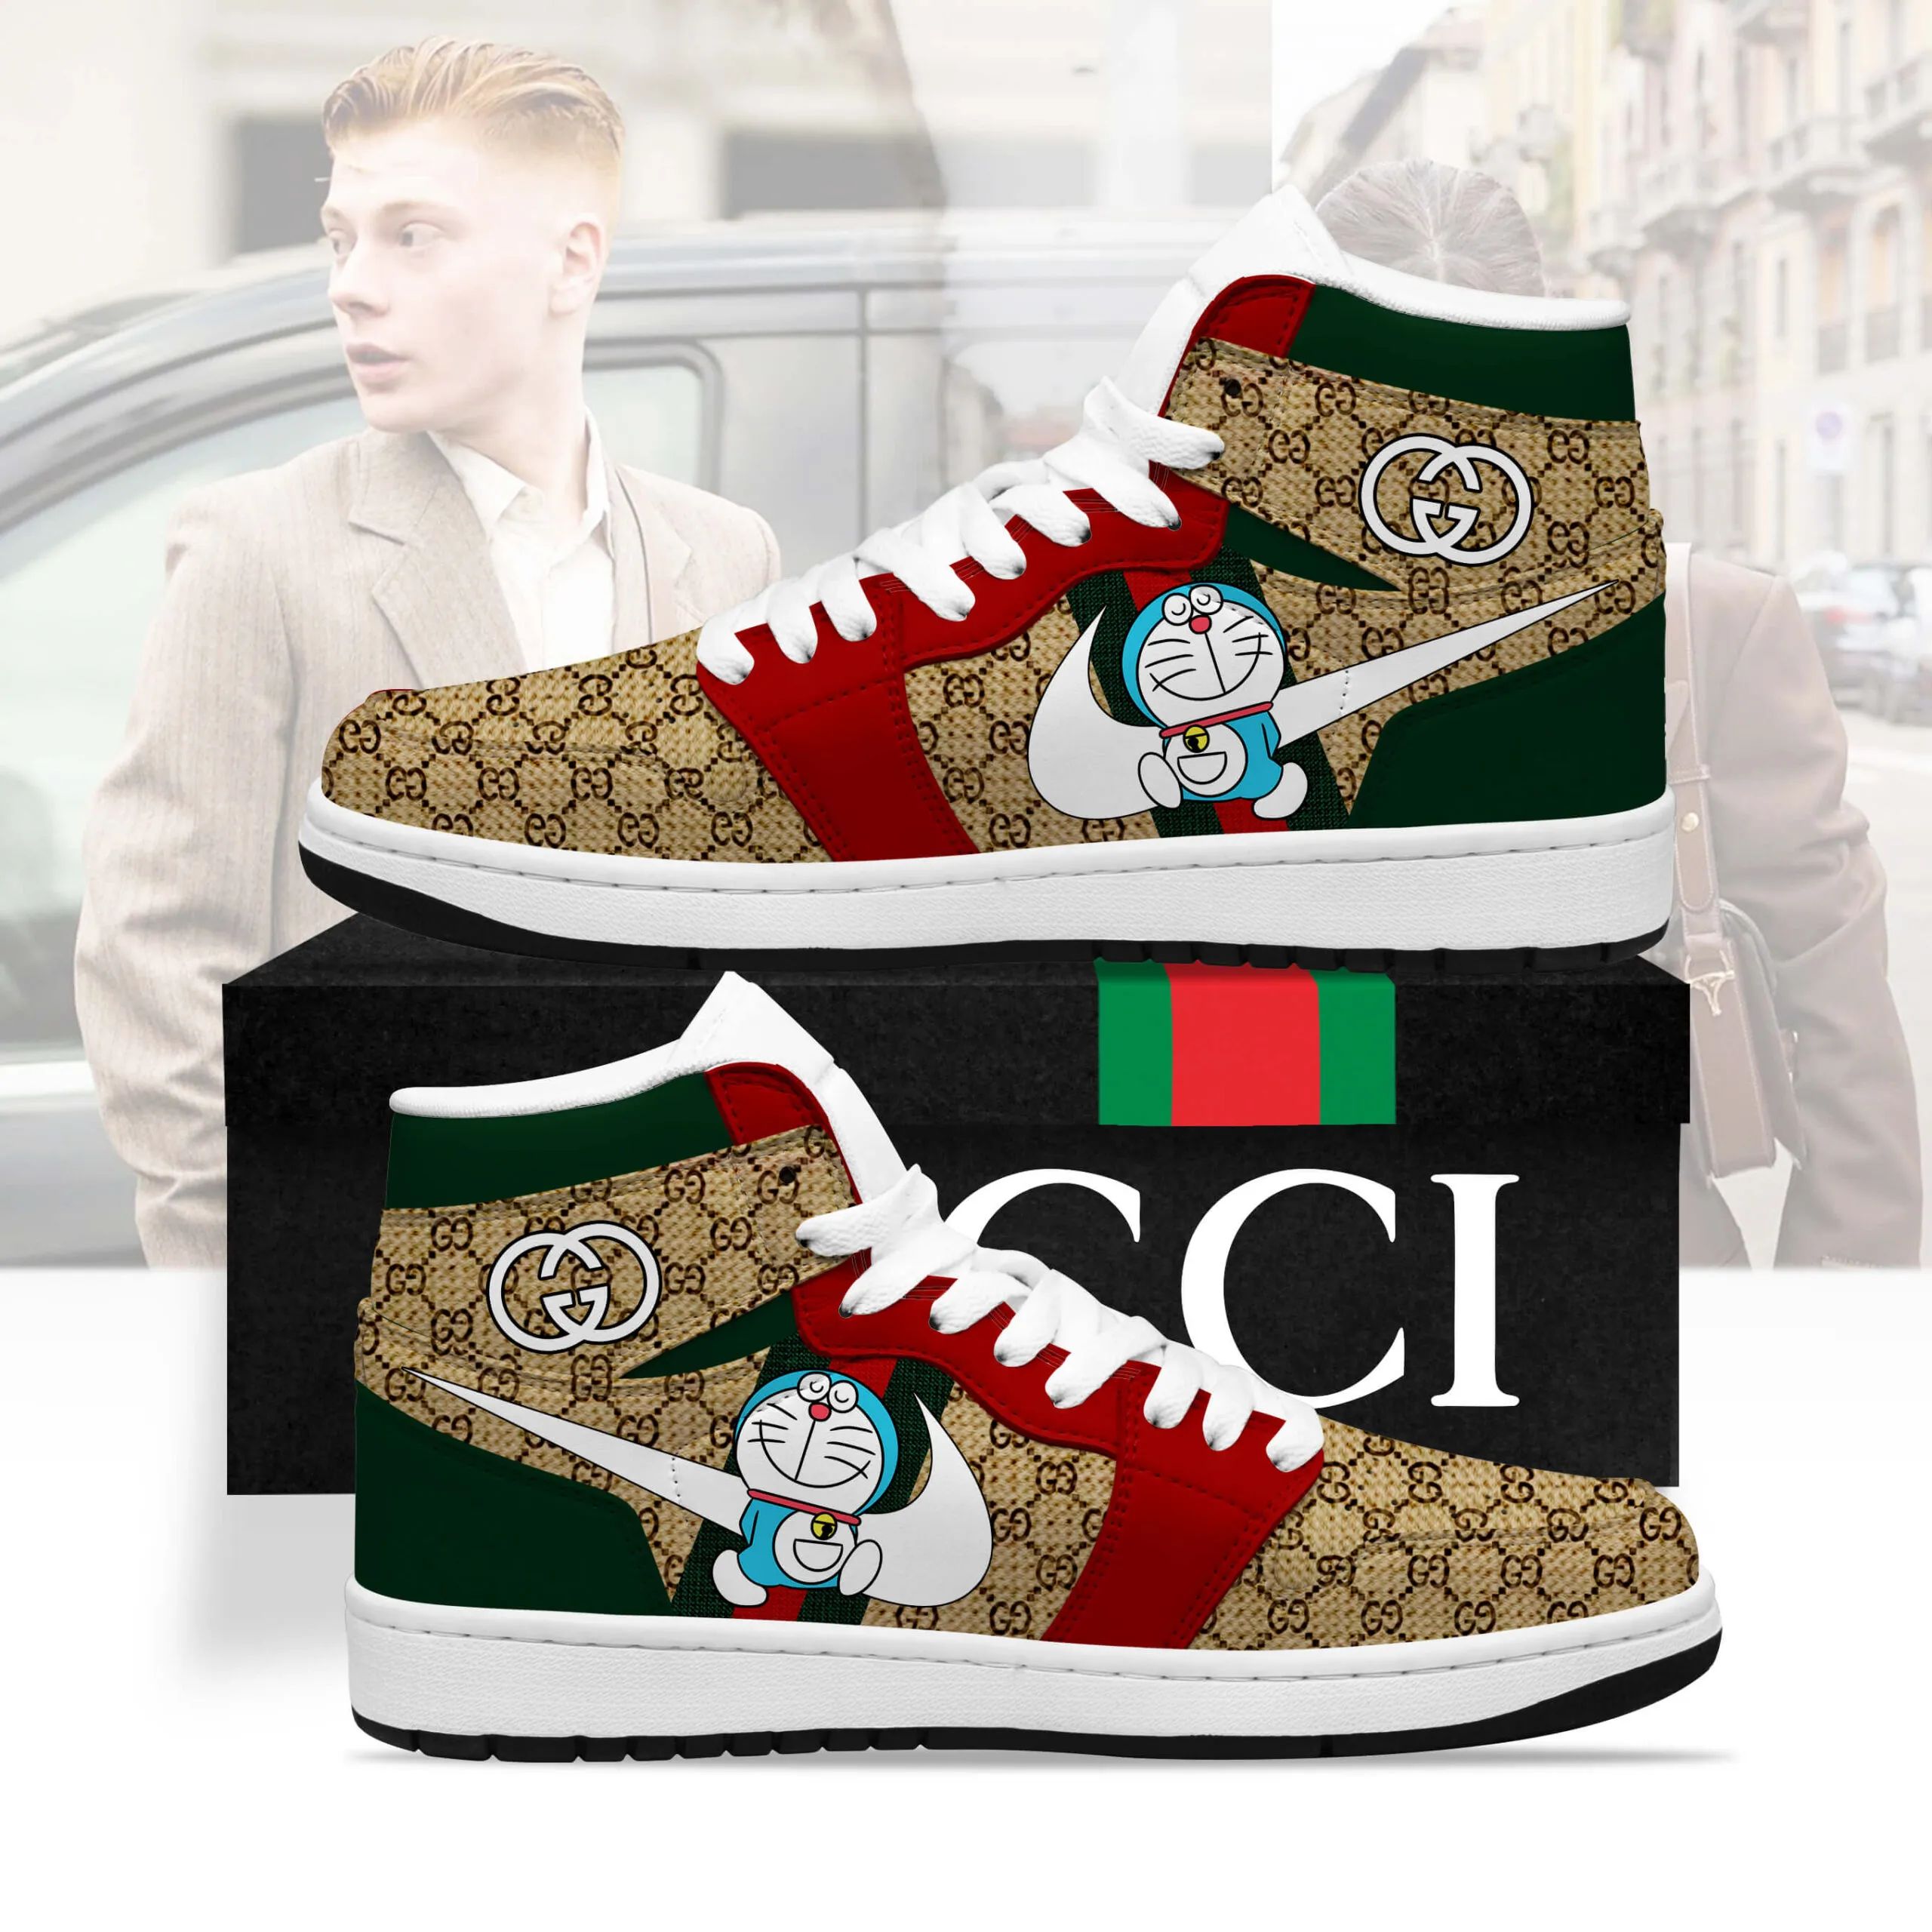 Gucci Doraemon High Air Jordan Luxury Sneakers Fashion Brand Shoes